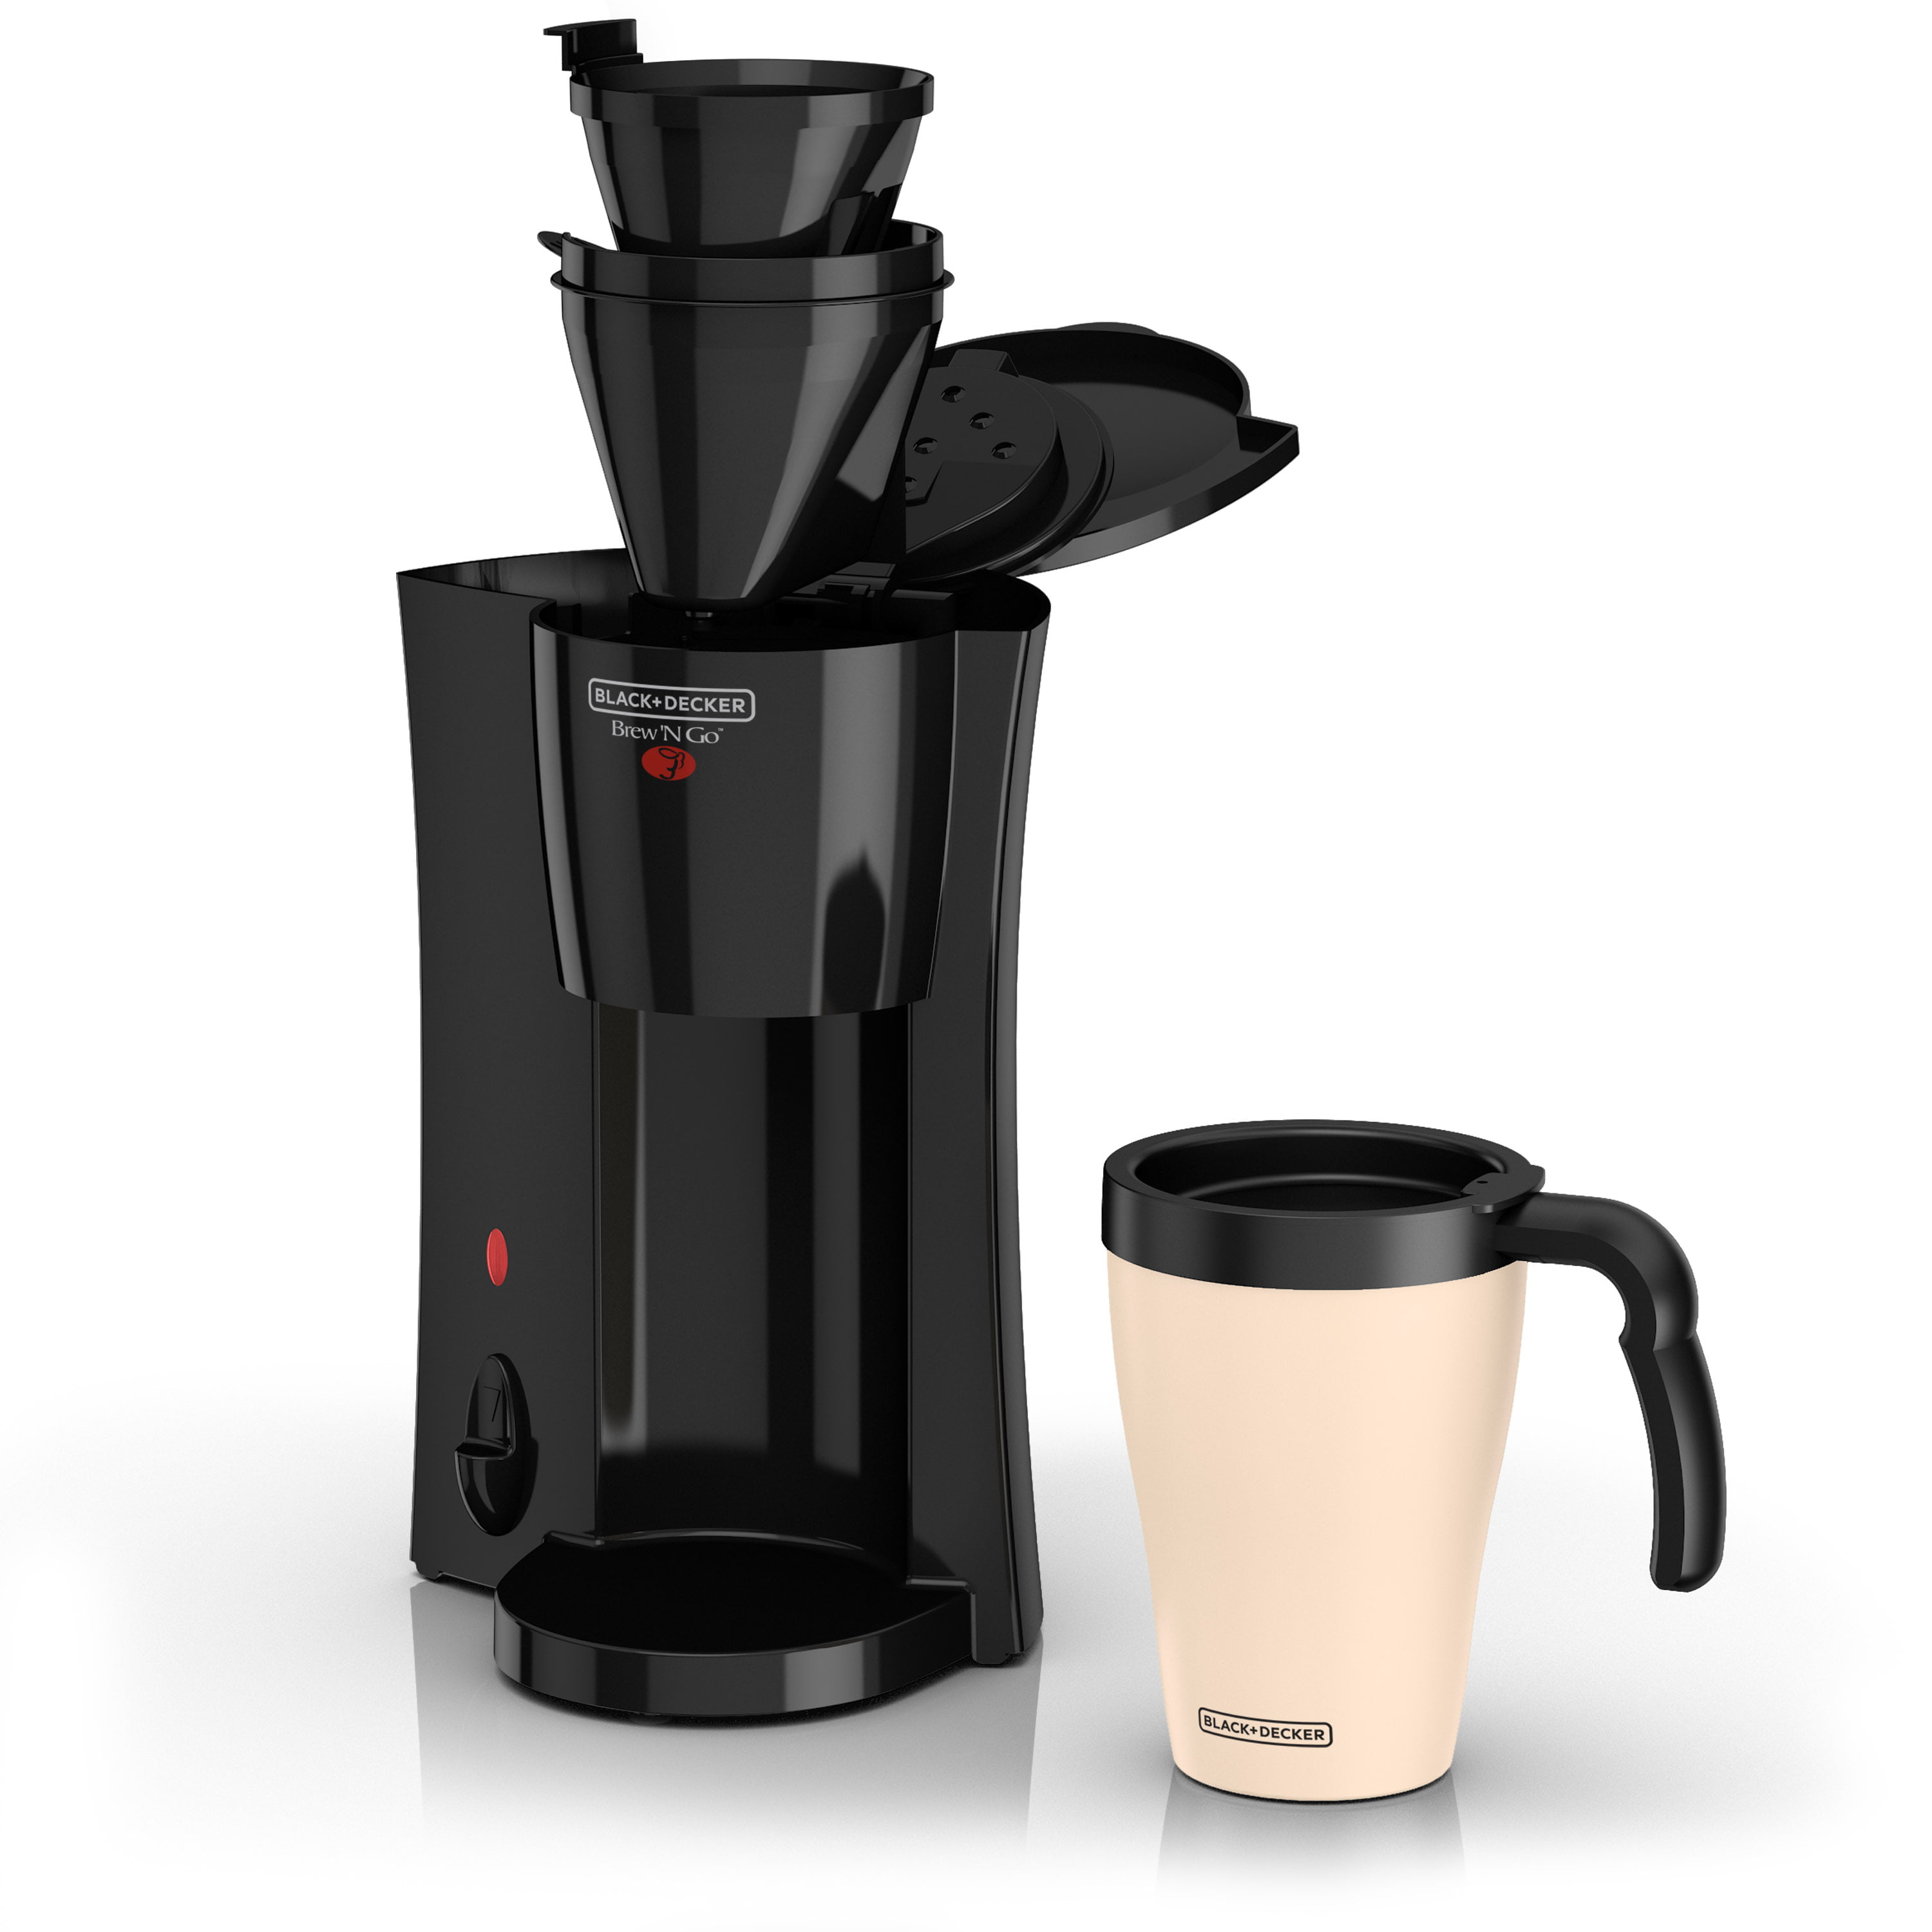  Black+Decker Brew 'n Go Personal Coffeemaker with Travel Mug,15  ounce Black/Beige, DCM18: Coffee Maker: Home & Kitchen